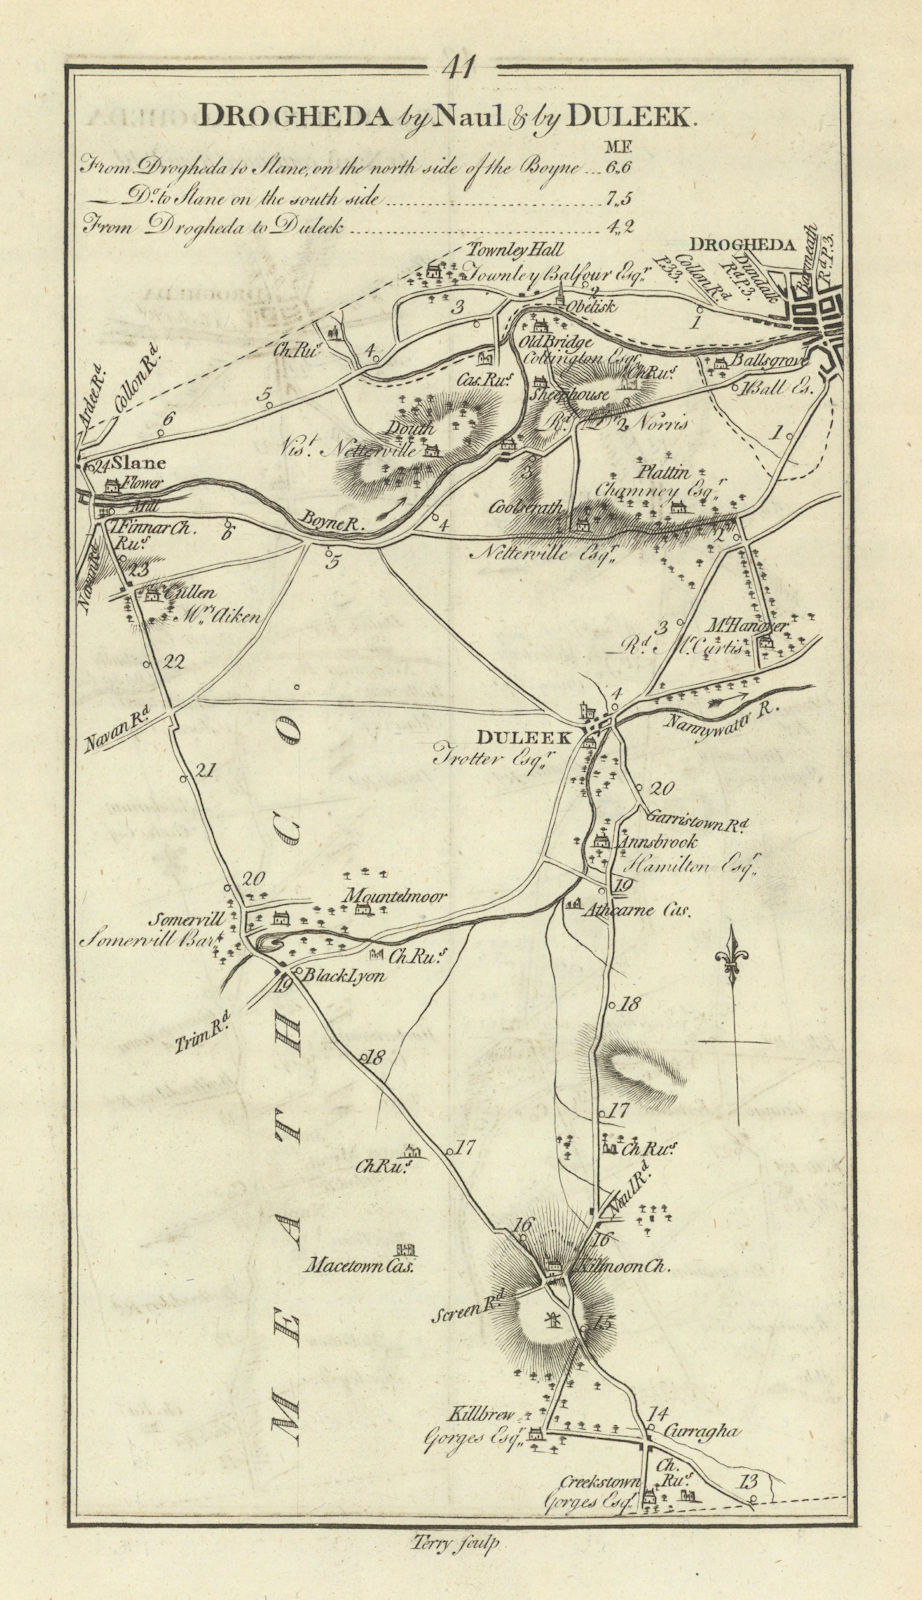 Associate Product #41 Drogheda by Naul & Duleek. Slane Meath Louth. TAYLOR/SKINNER 1778 old map